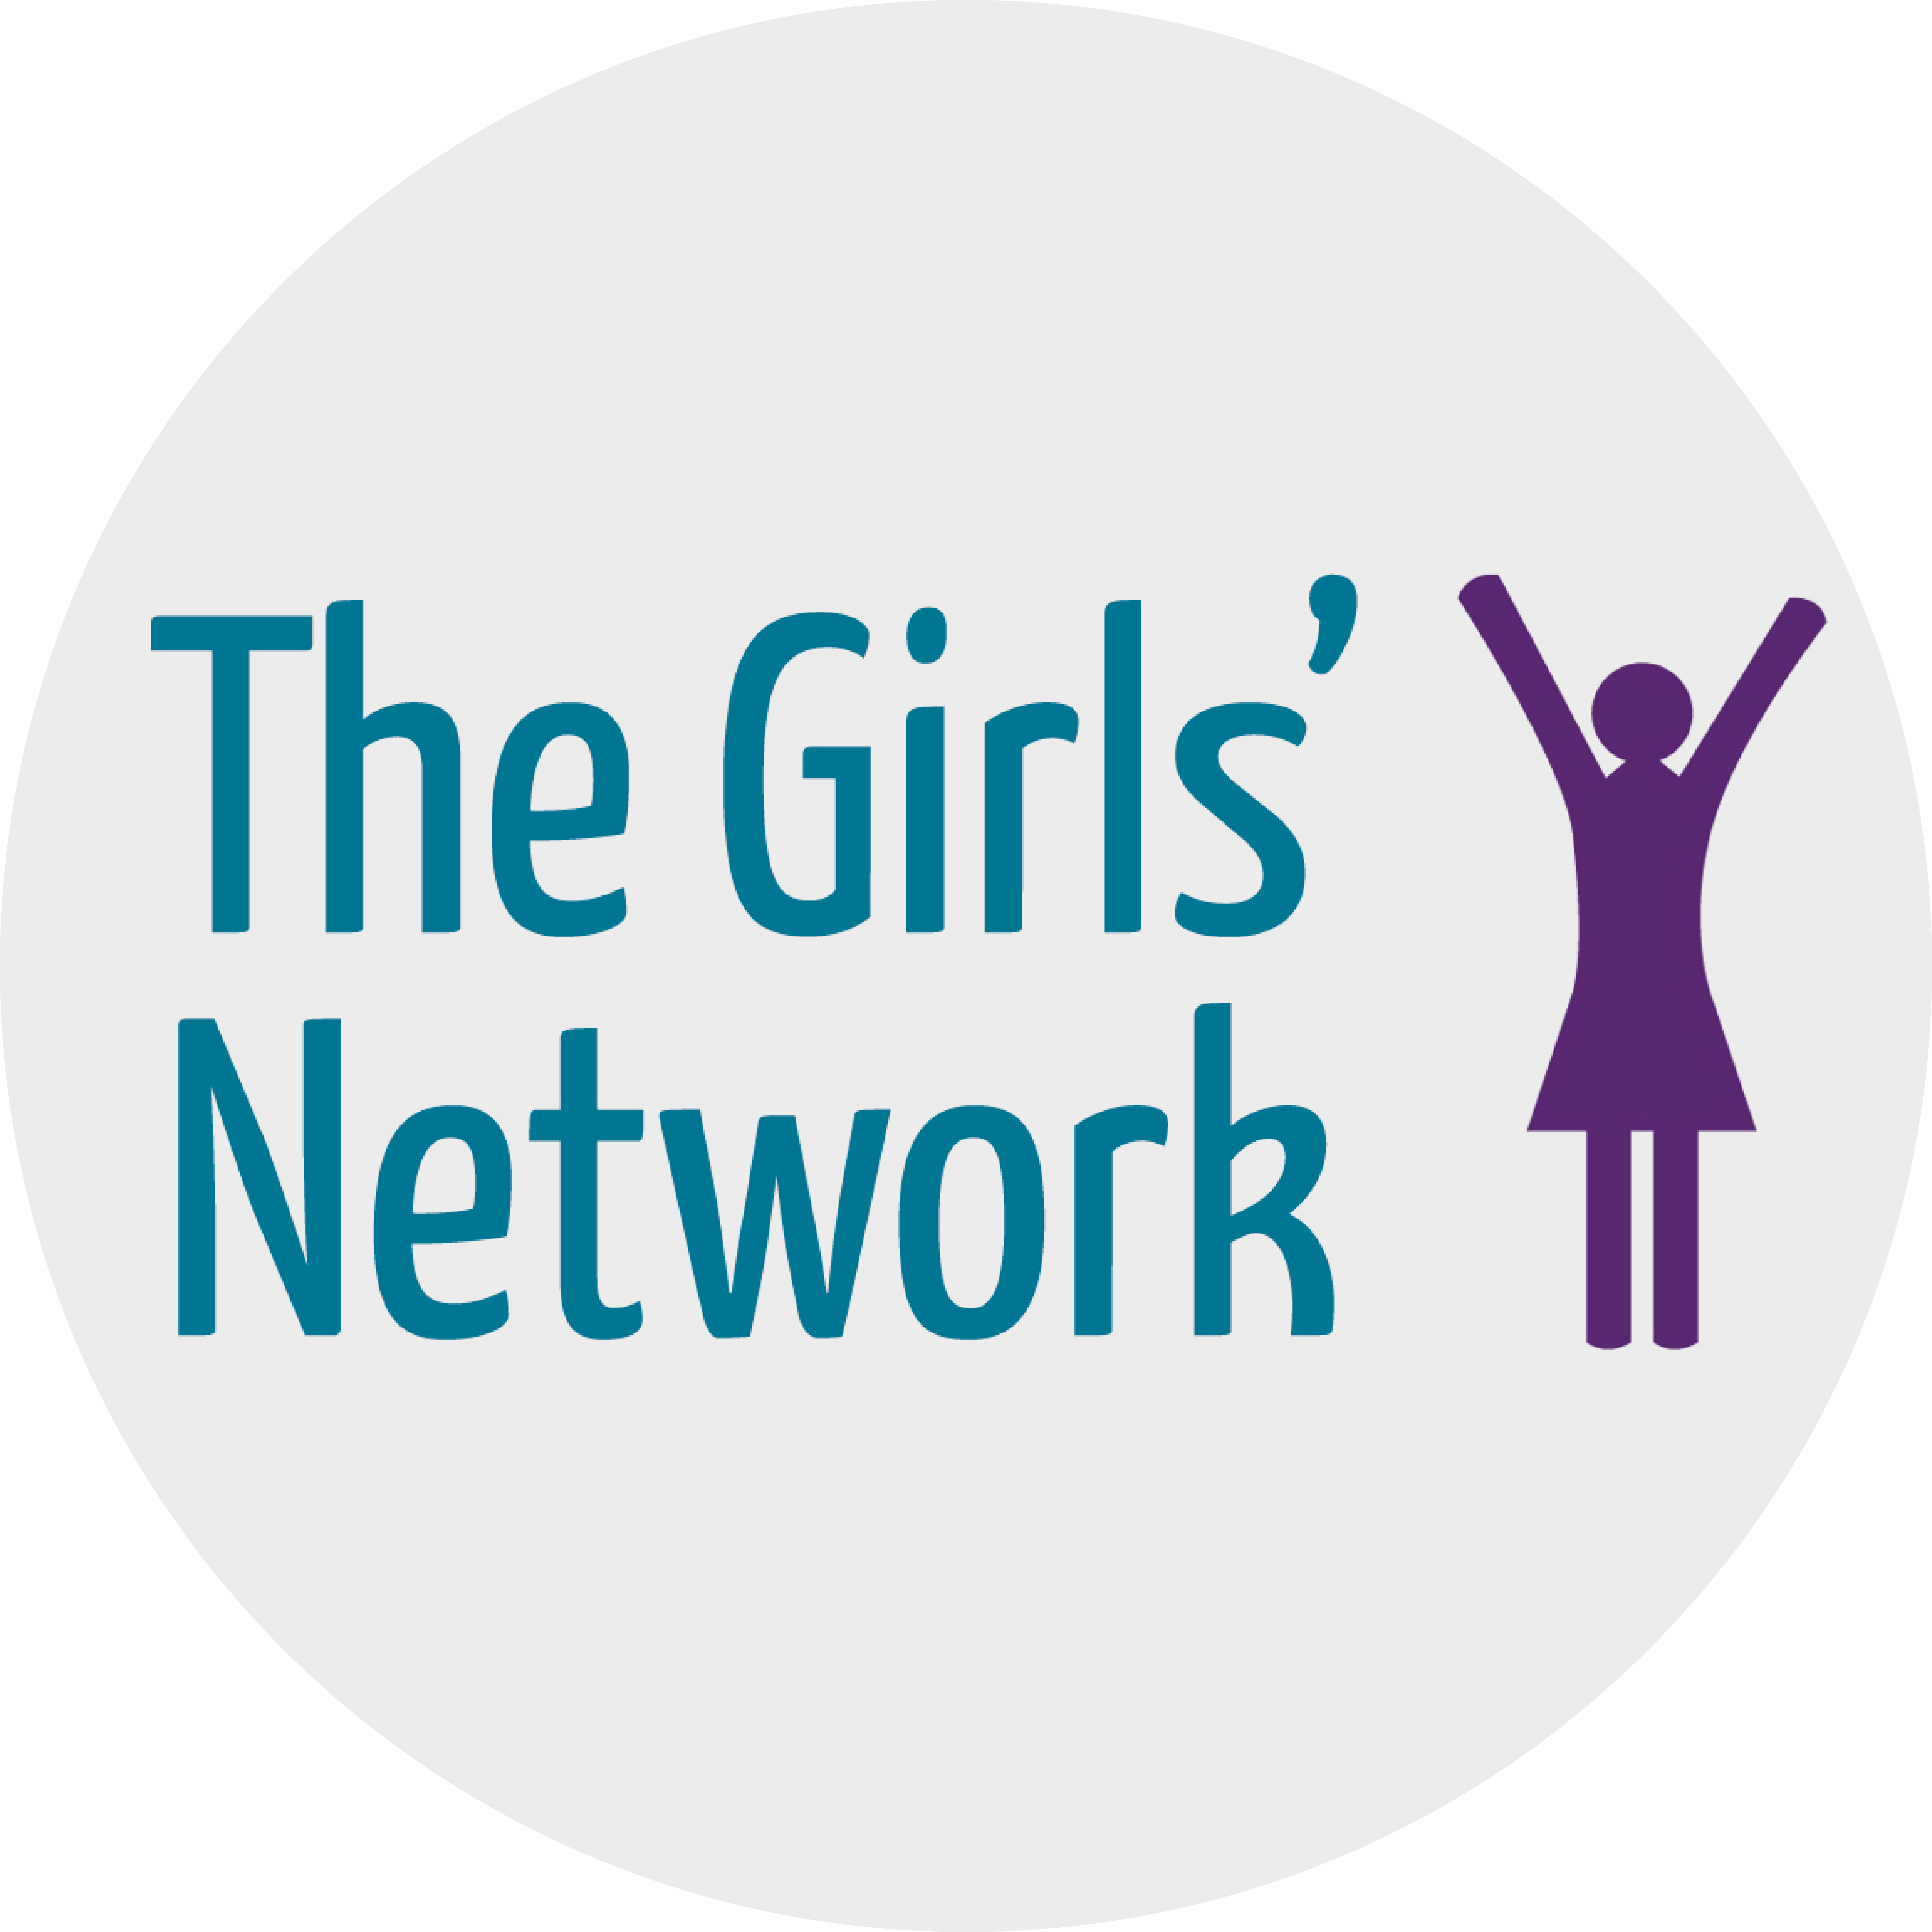 The Girls' Network logo.